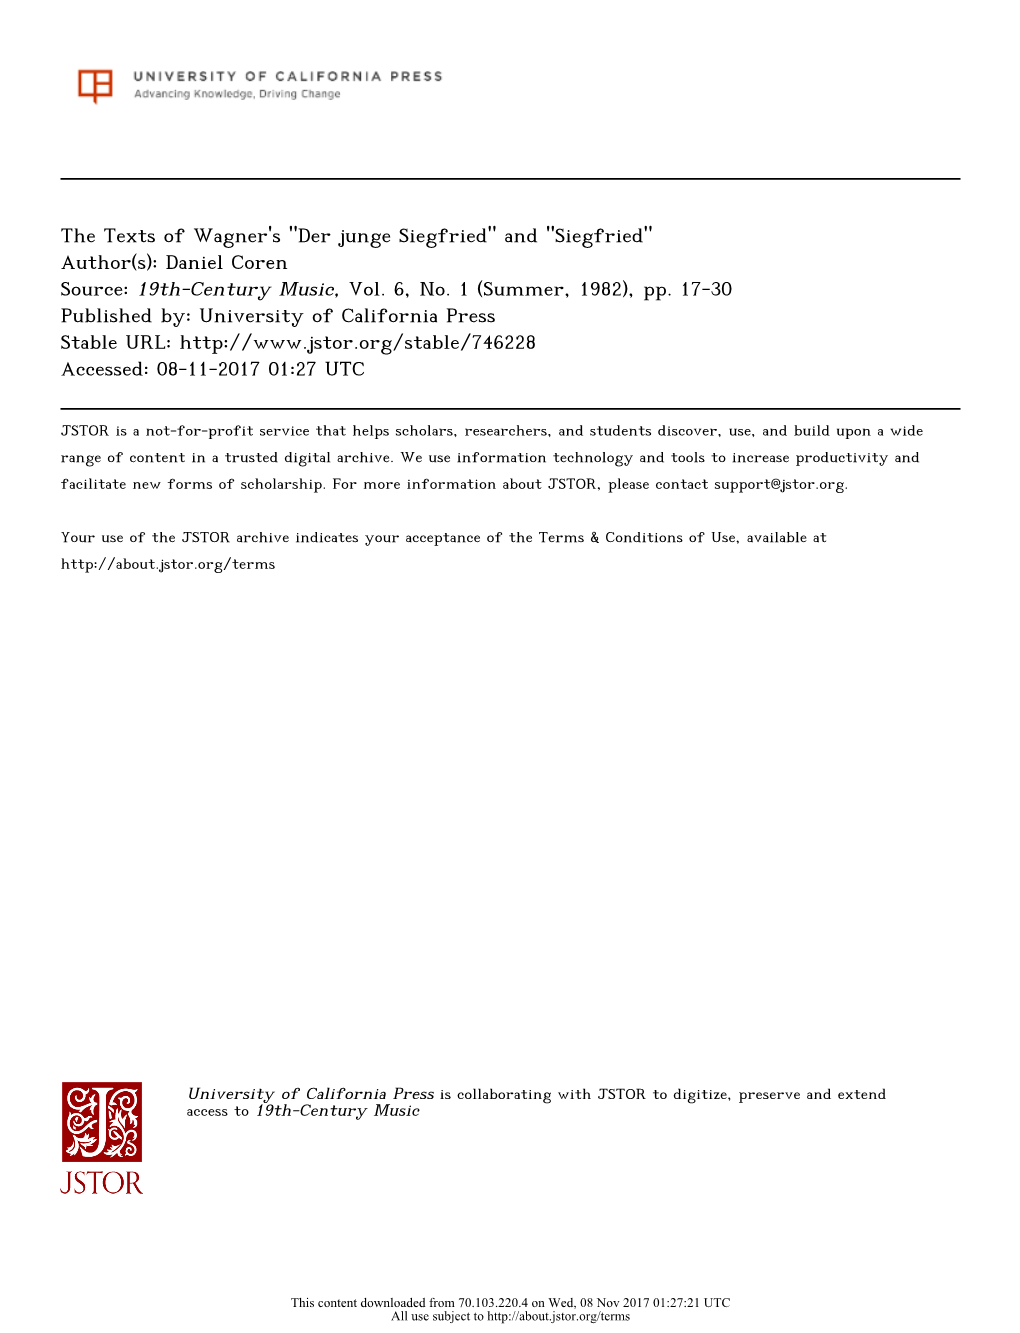 The Texts of Wagner's "Der Junge Siegfried" and "Siegfried" Author(S): Daniel Coren Source: 19Th-Century Music, Vol